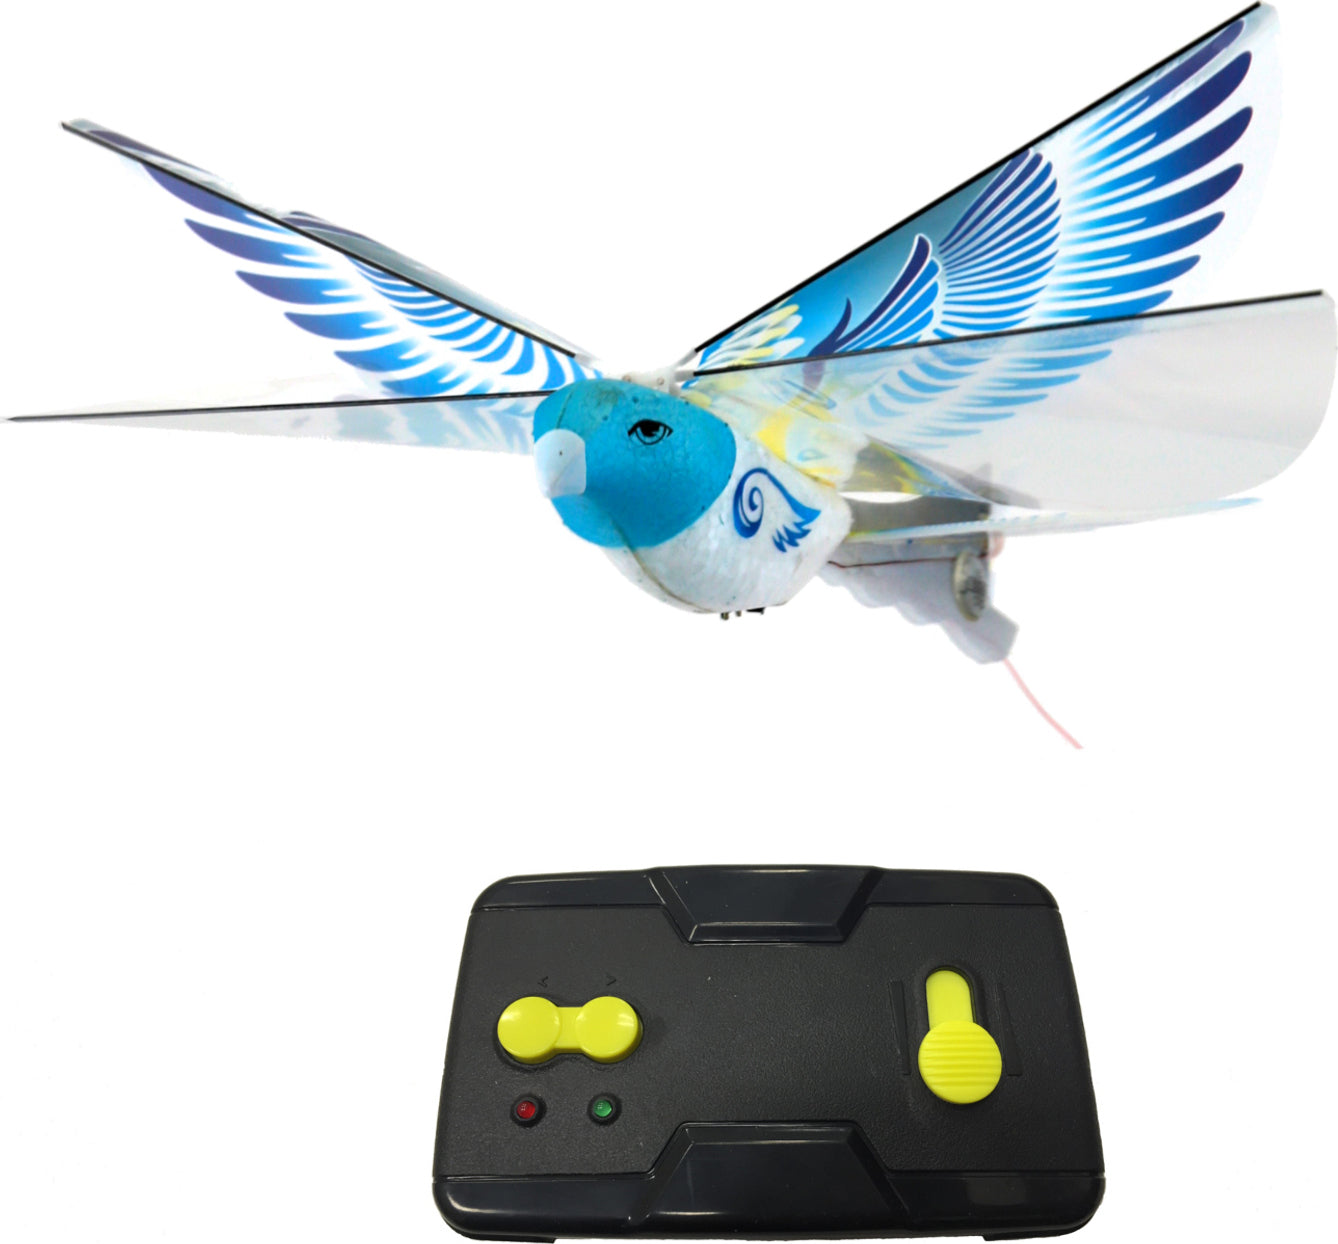 eBird Blue [Pigeon] - x2 Channel RC Flying Bird